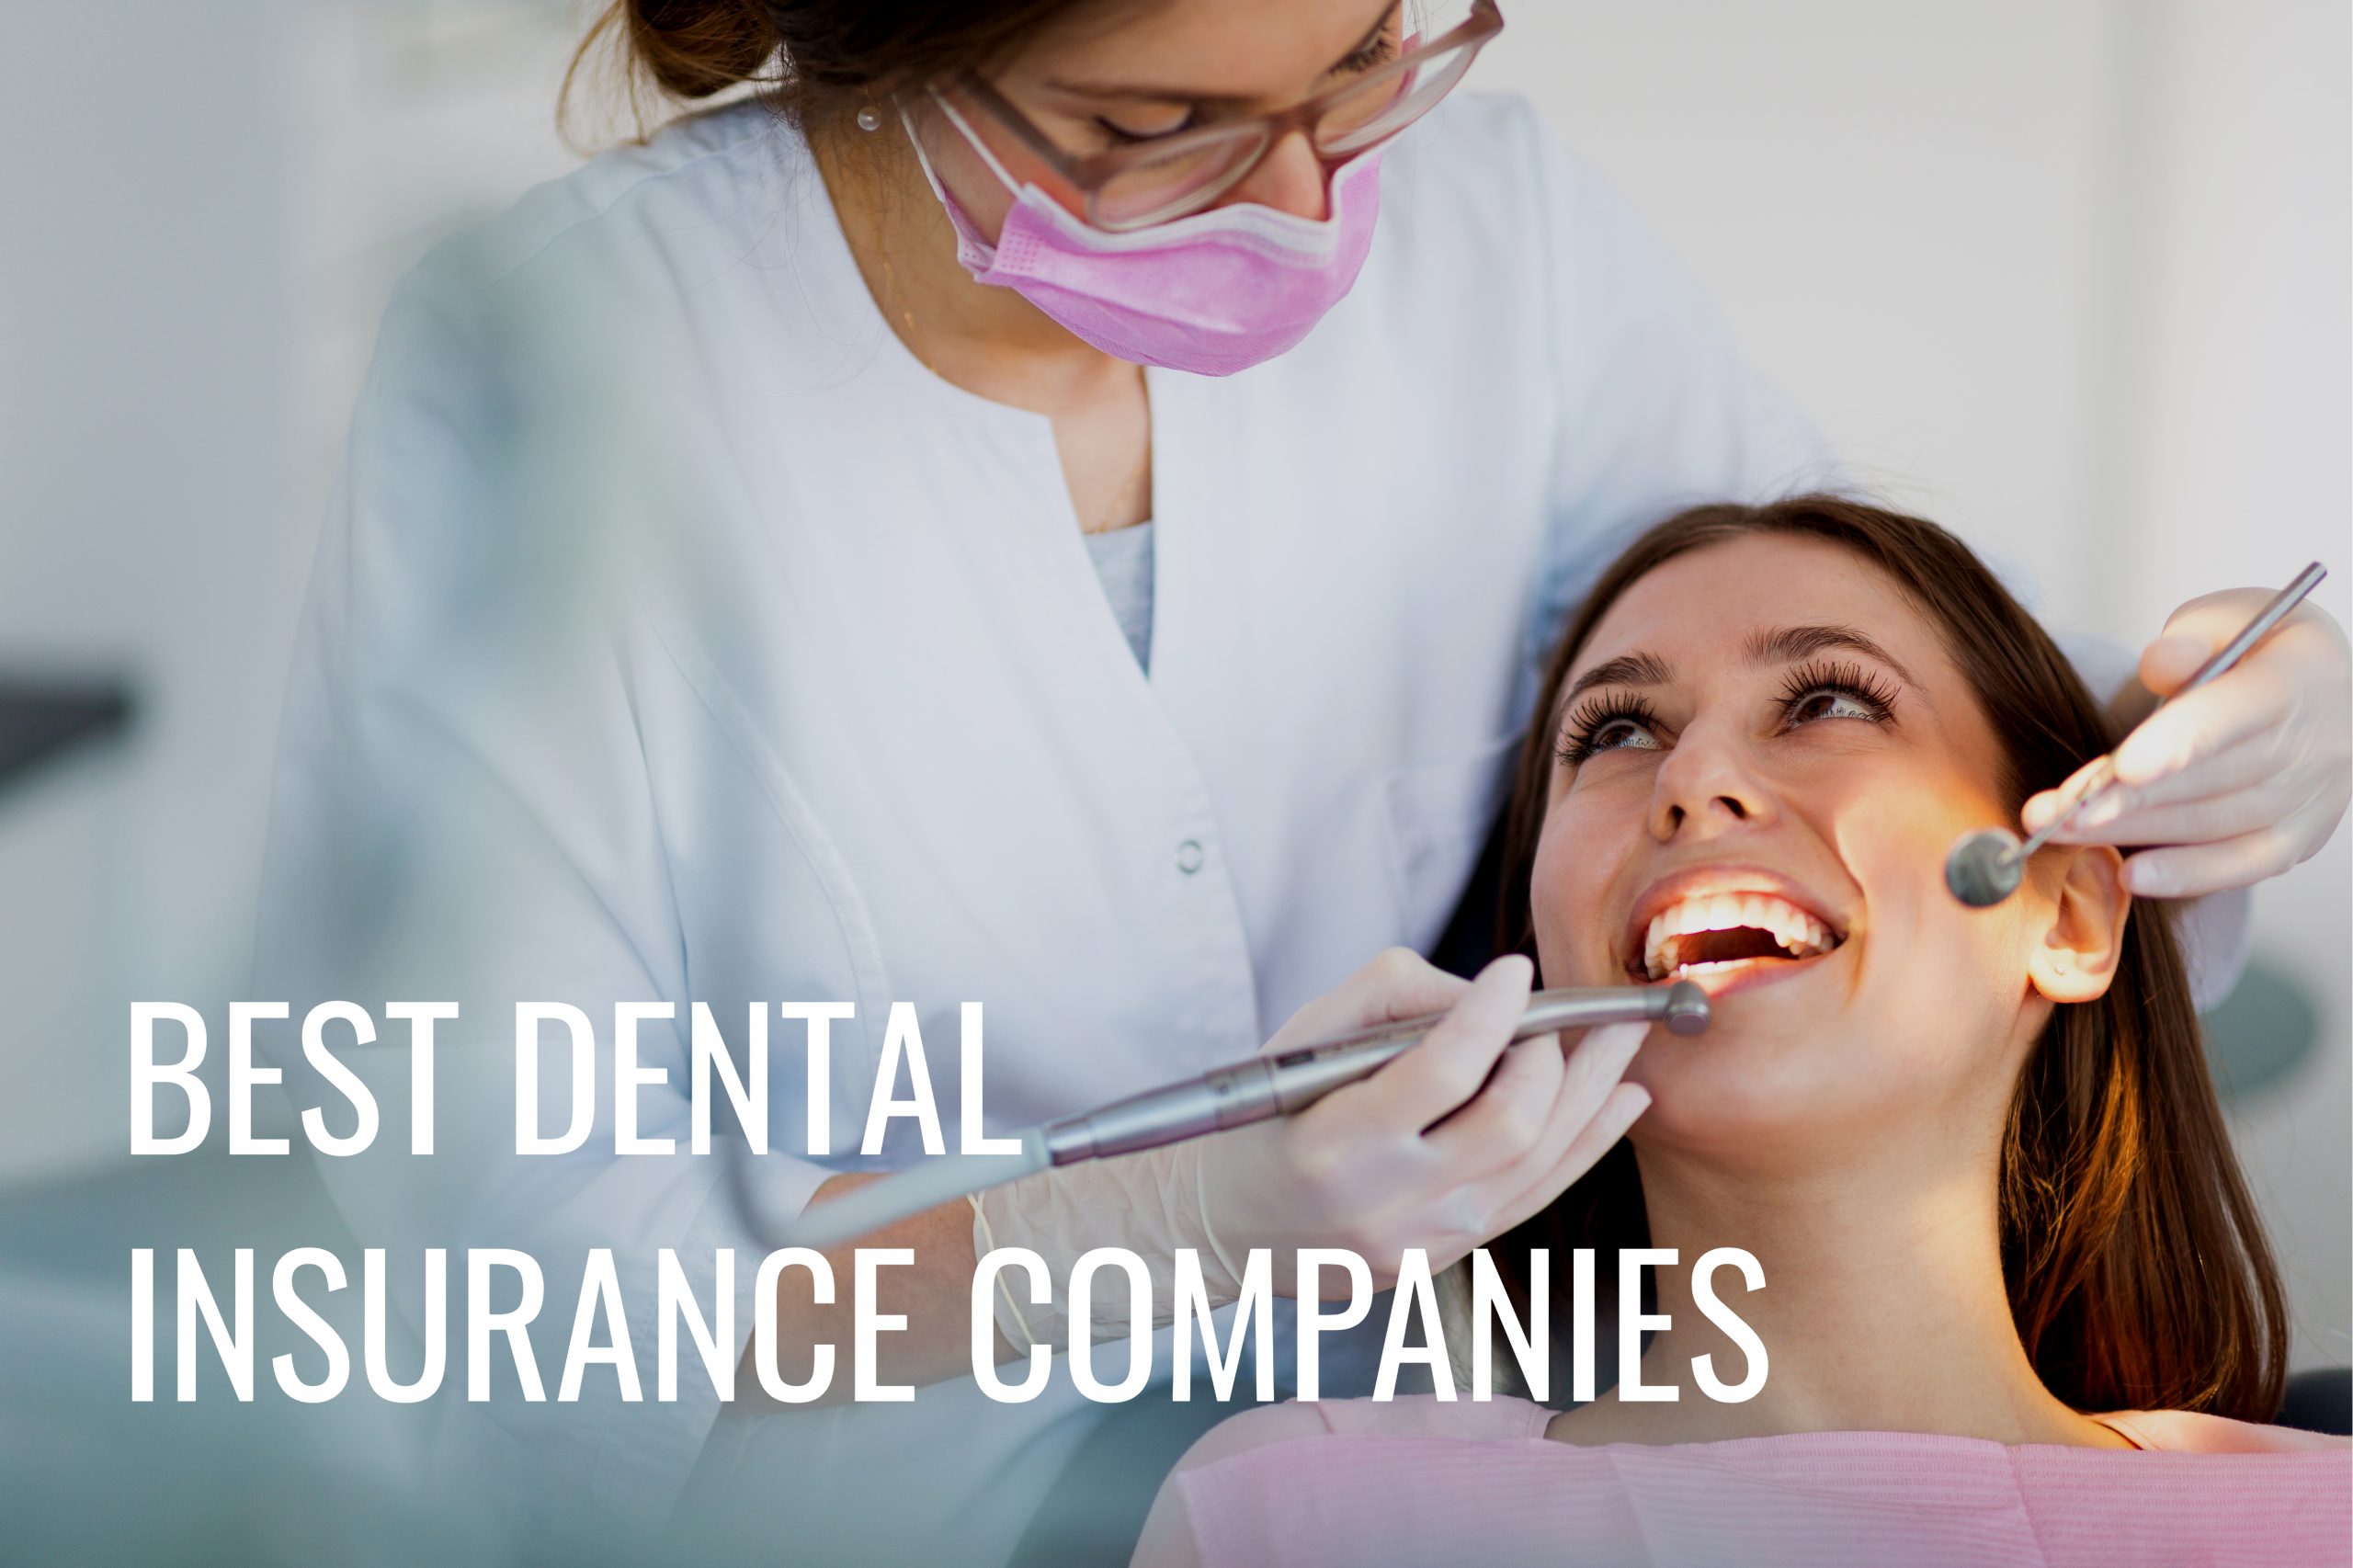 8 Best Dental Insurance Companies 2020 | Insurance Blog By Chris